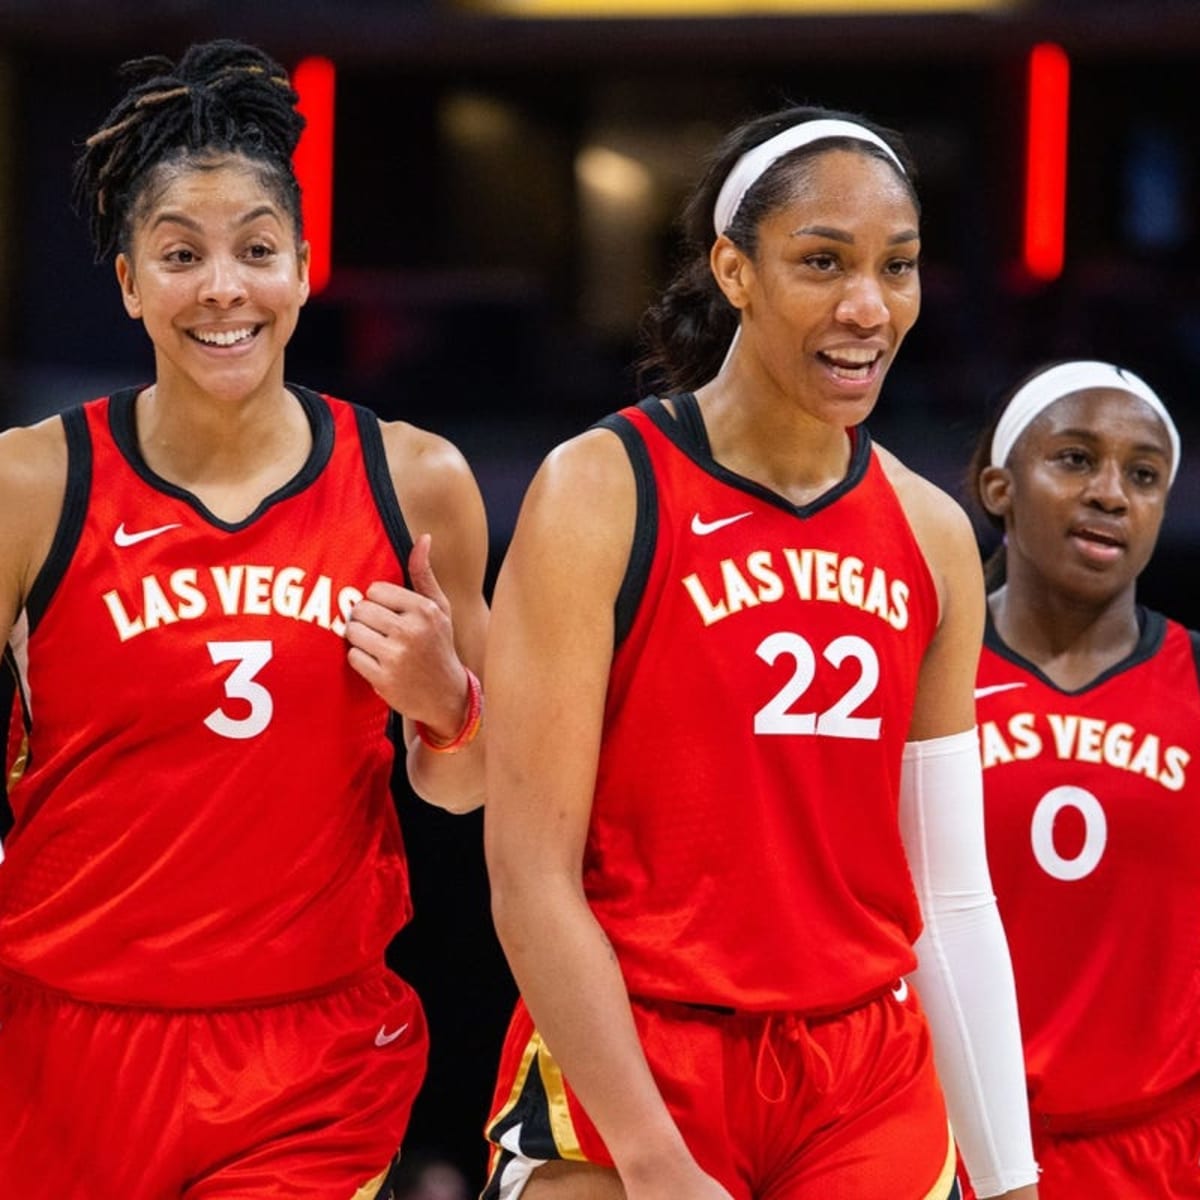 LV Aces Youth Basketball Team, Las Vegas Nevada